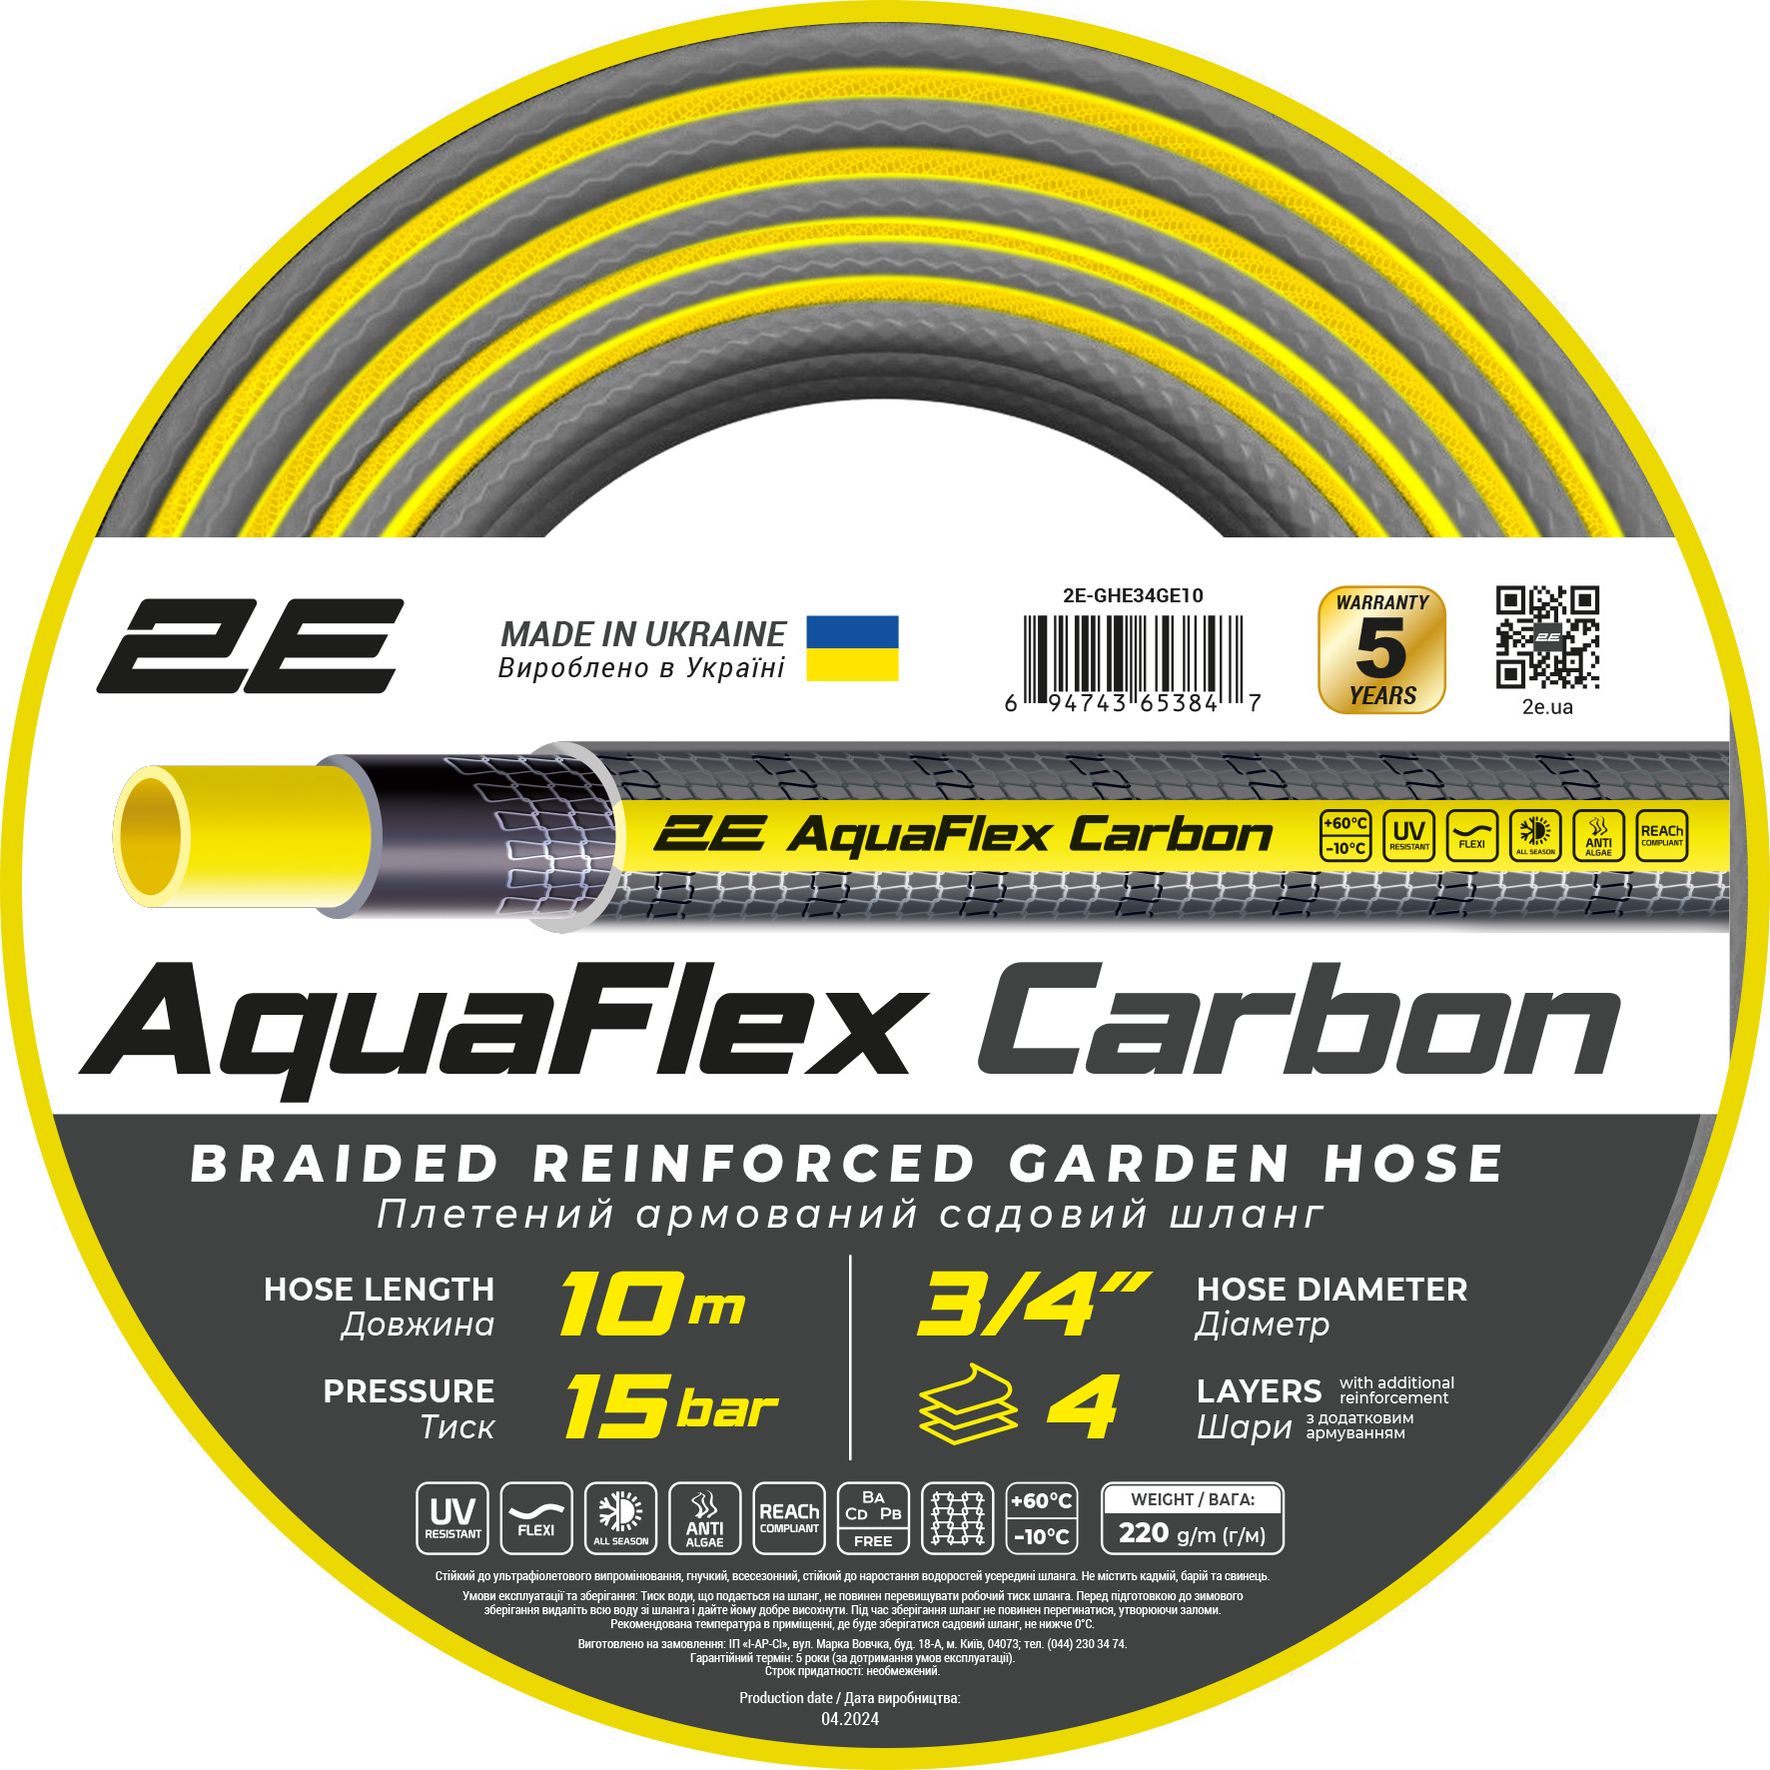 Шланг садовый 2Е AquaFlex Carbon 3/4" 4 слоя 10 м (2E-GHE34GE10) - фото 1